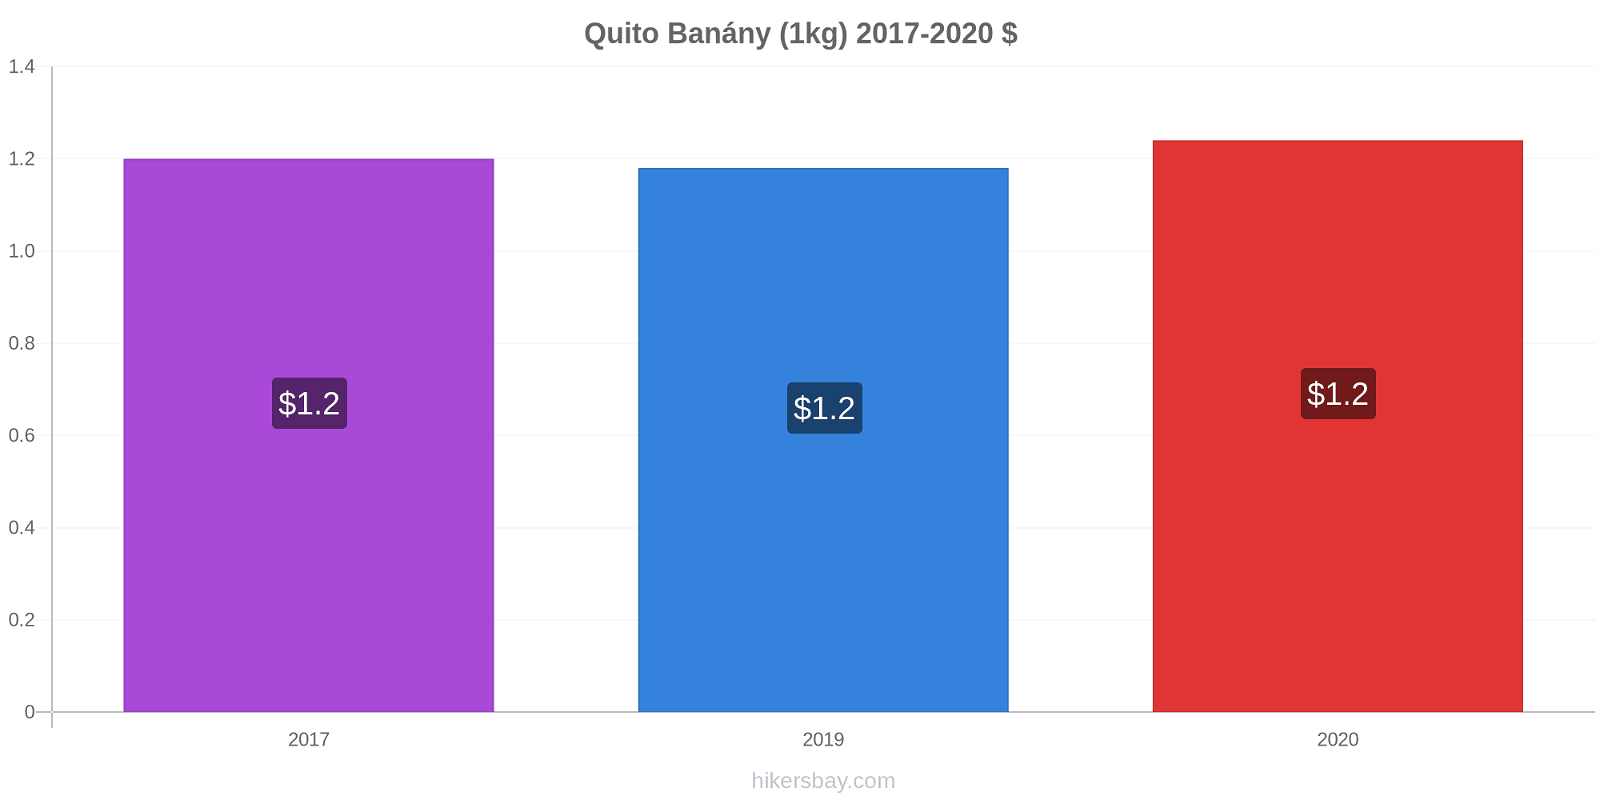 Quito změny cen Banány (1kg) hikersbay.com